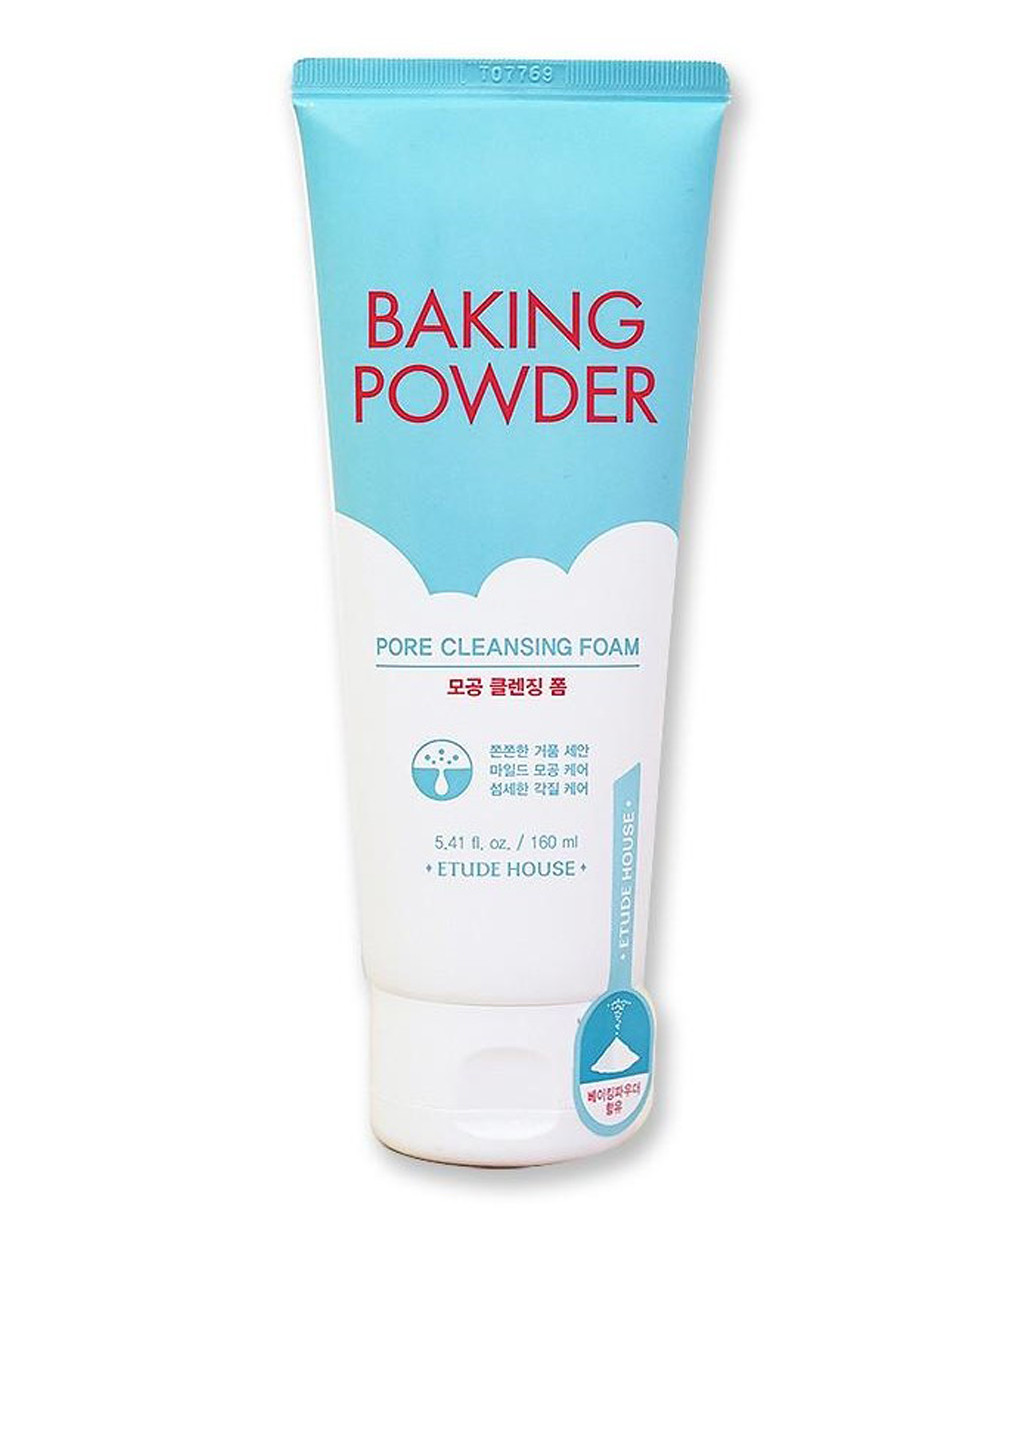 Пенка для лица очищающая Baking Powder Pore Cleansing Foam, 160 мл Etude House